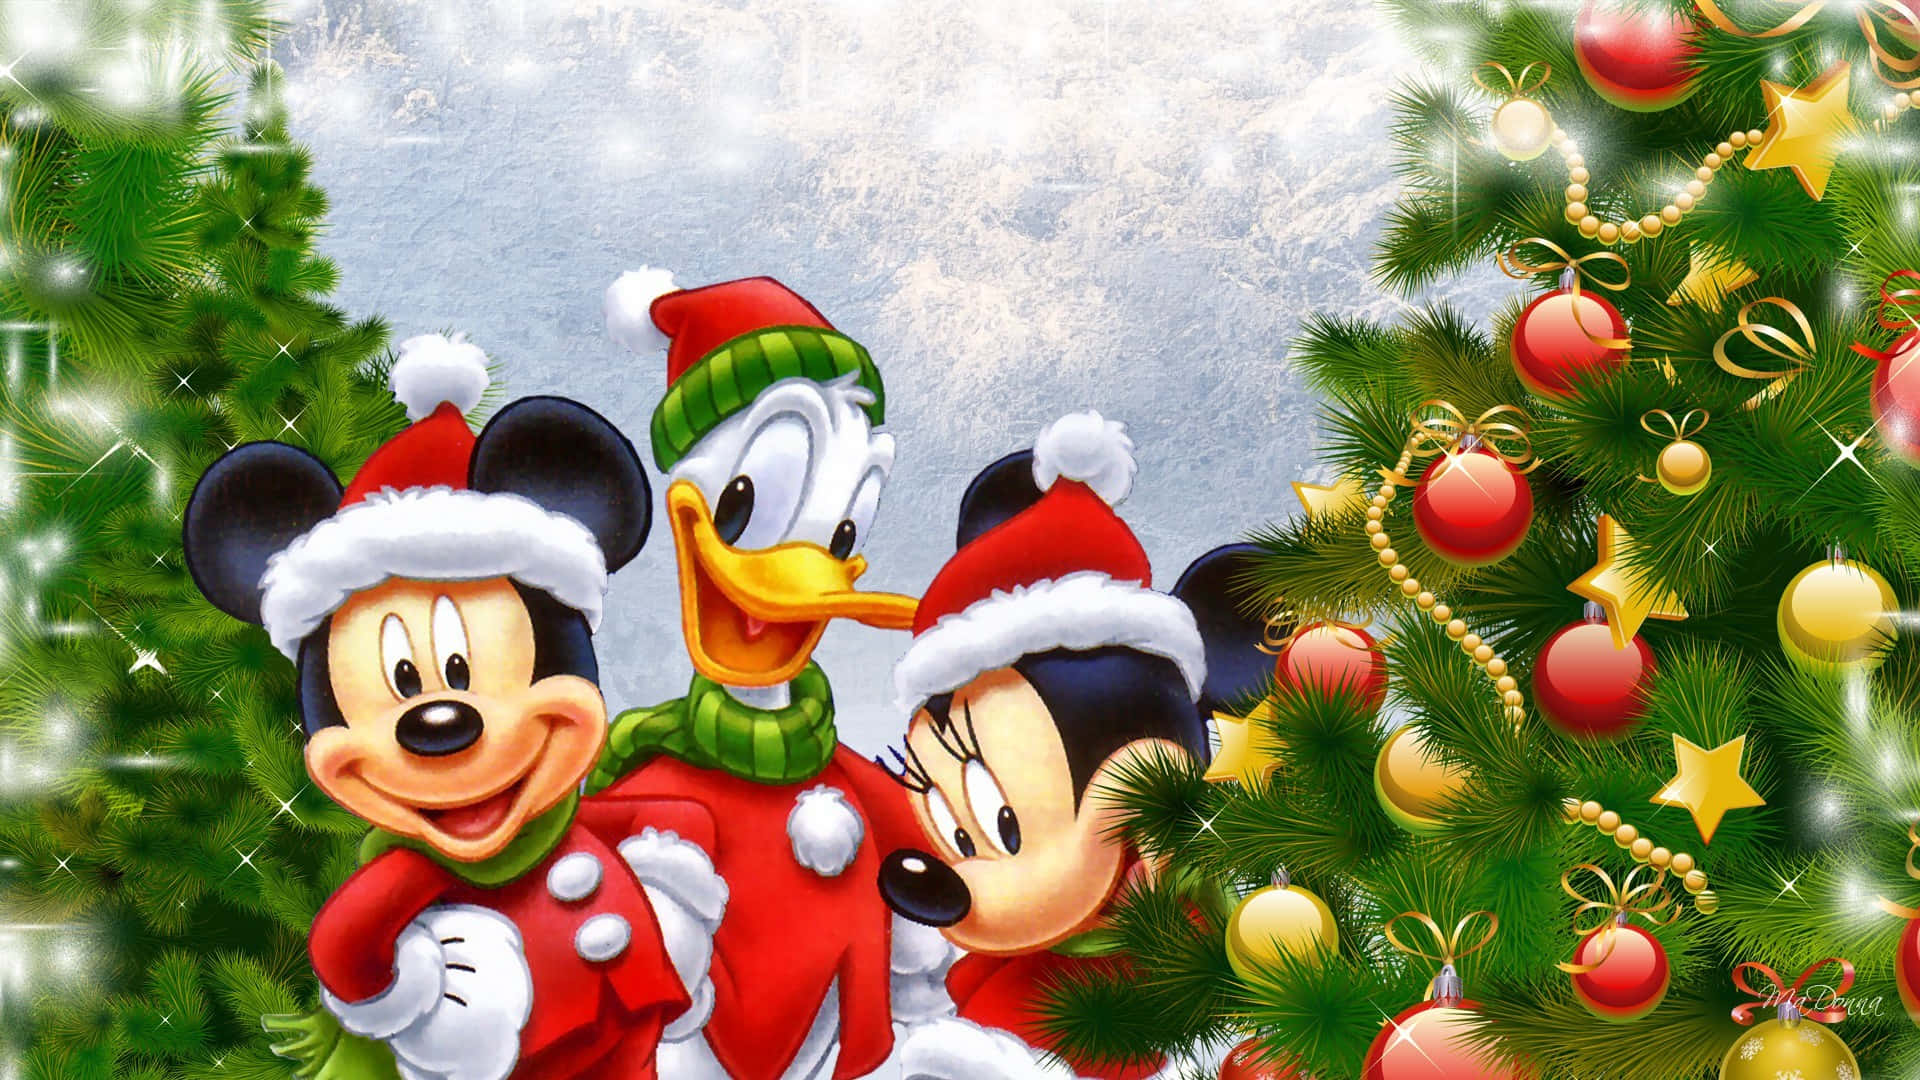 Disney Christmas Ipad With Donald Duck Wallpaper